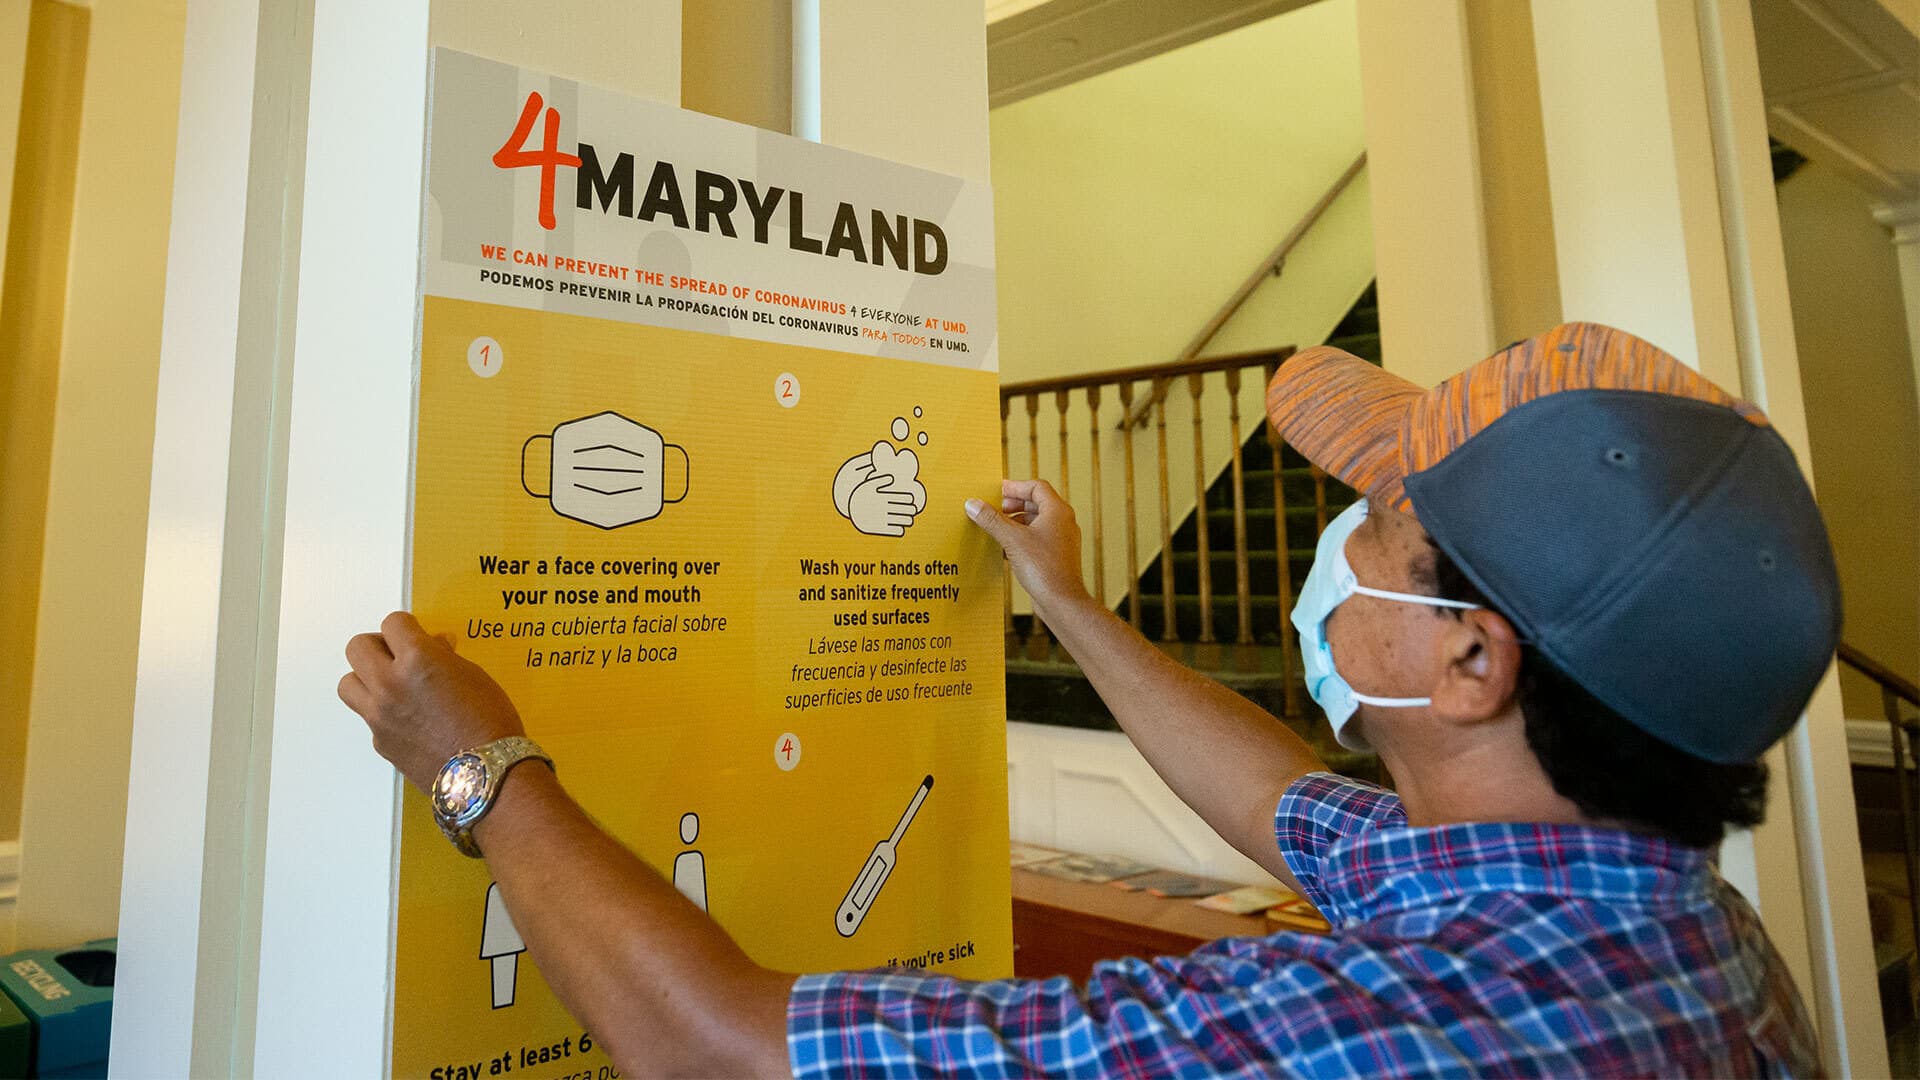 Masked employee hanging up "4 Maryland" poster